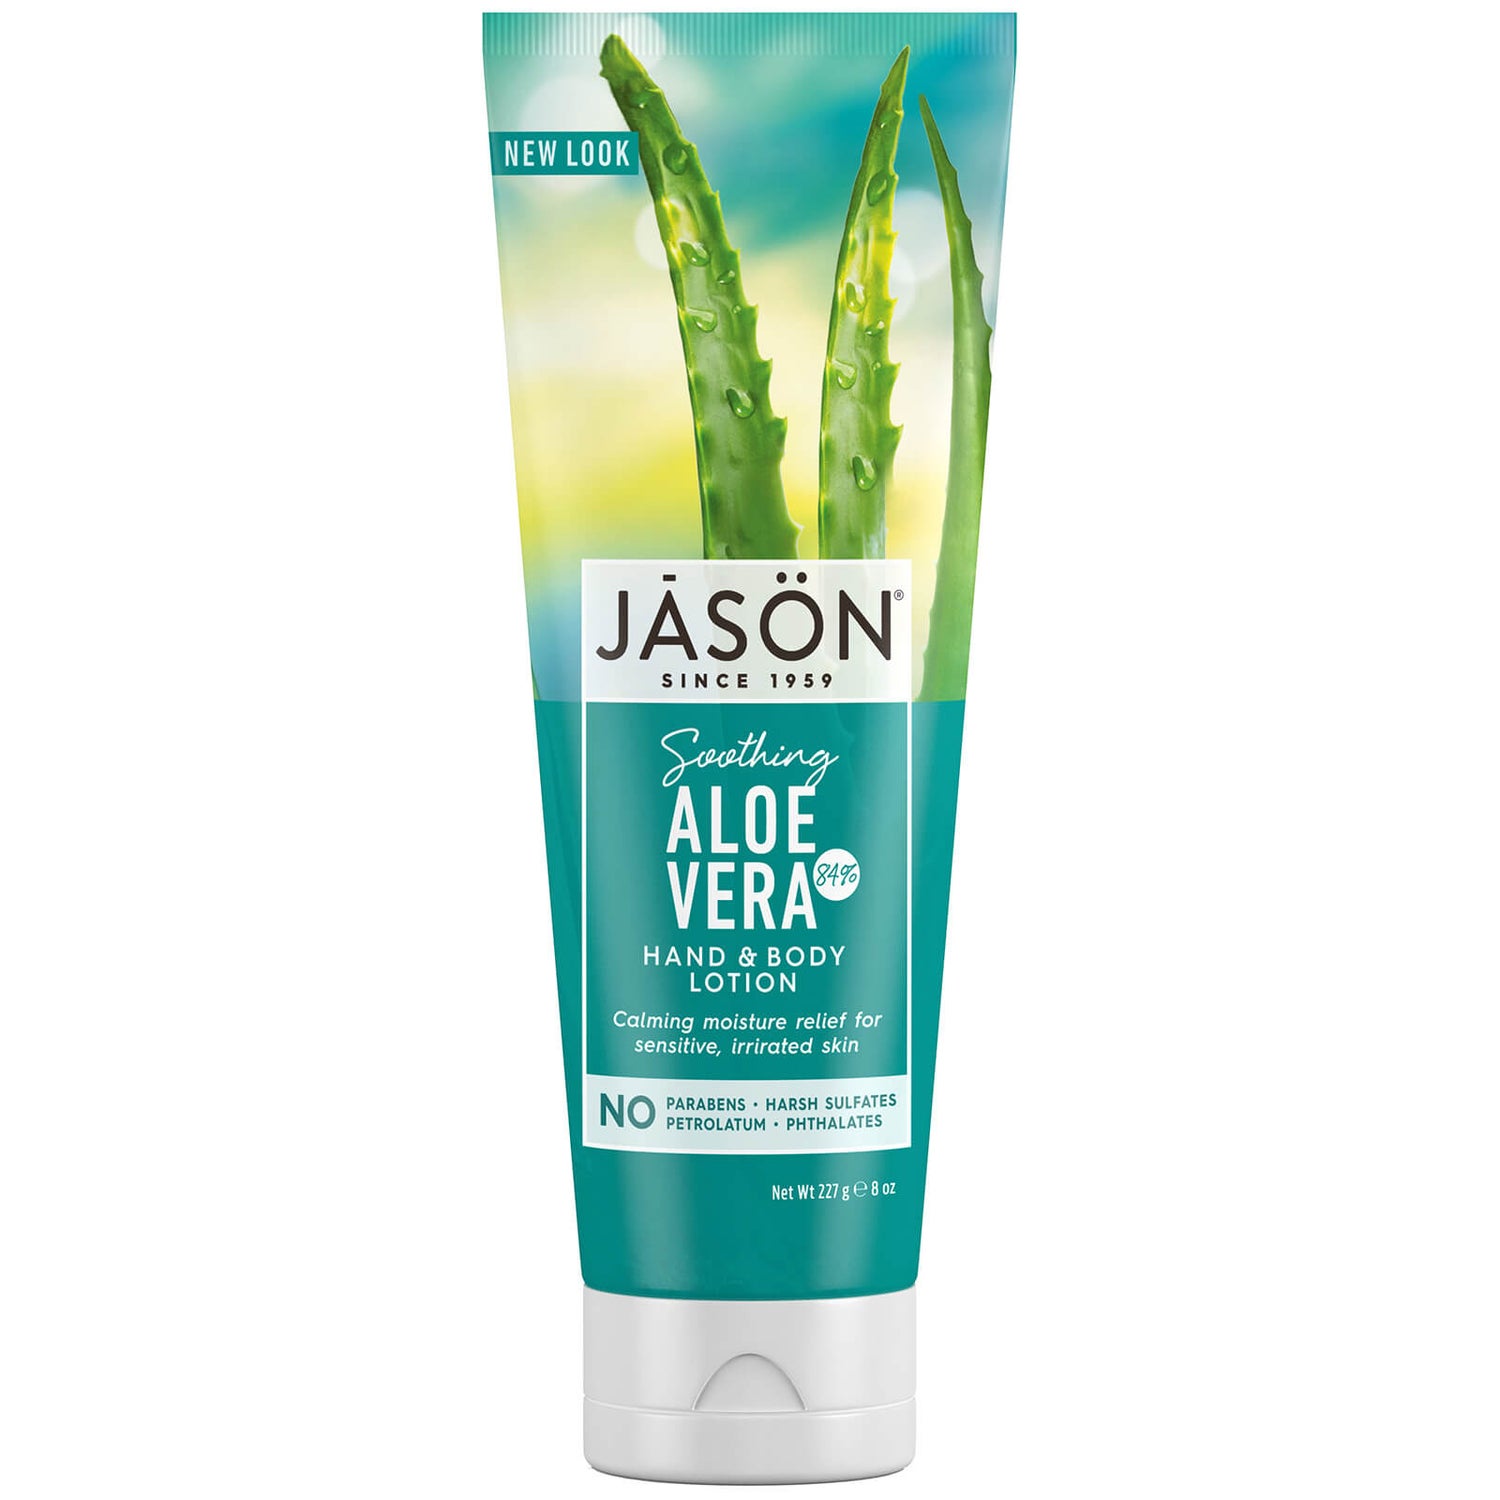 JASON Soothing 84% Aloe Vera Hand and Body Lotion (227g)